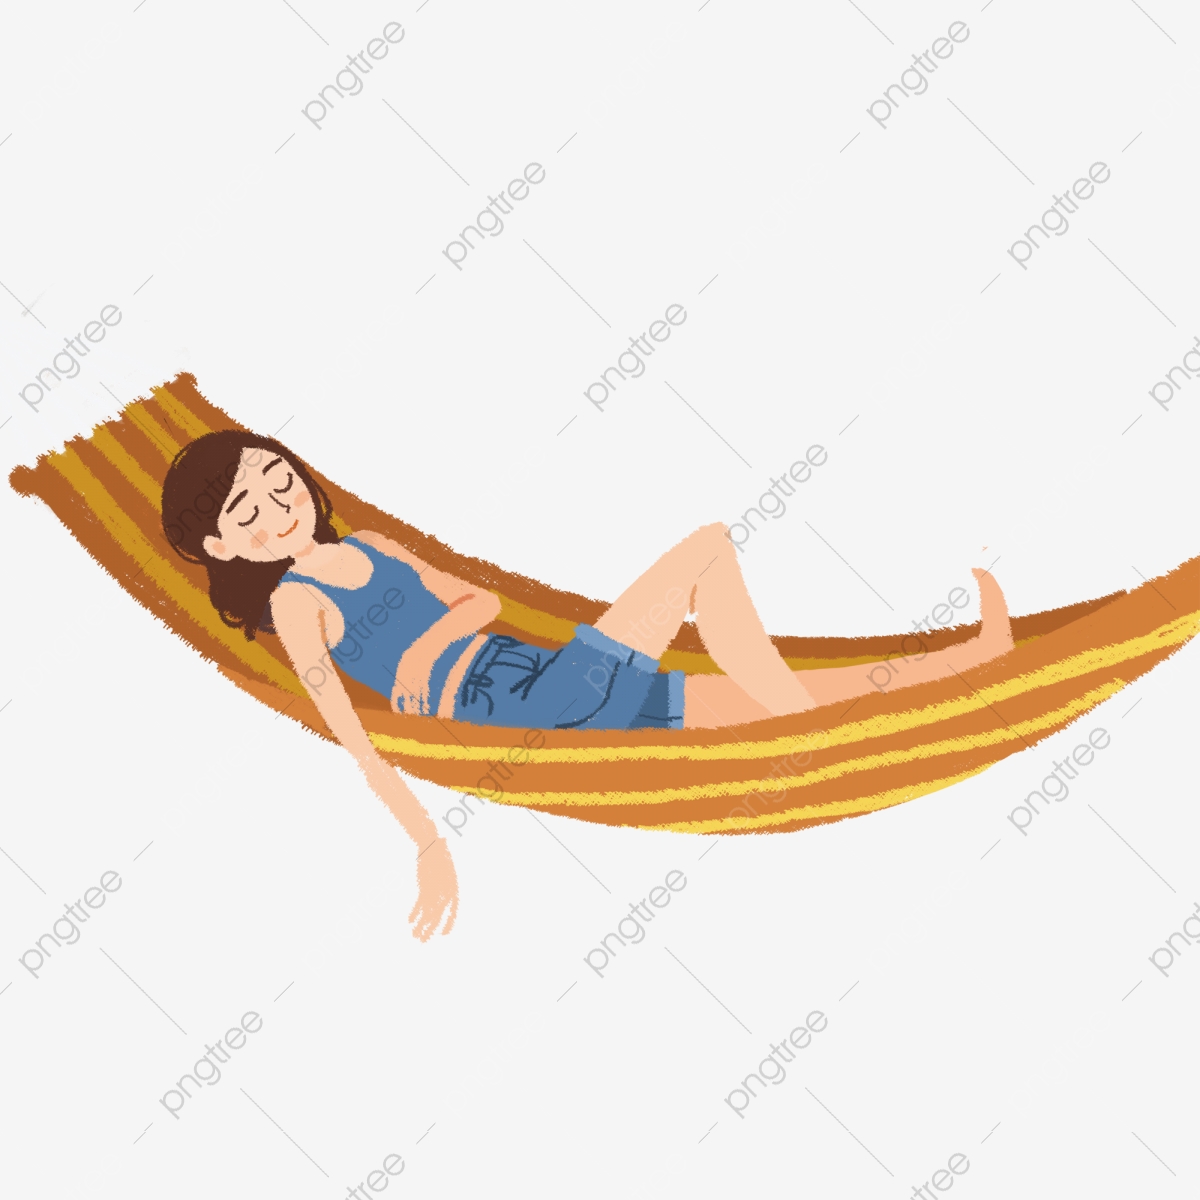 hammock clipart dormant